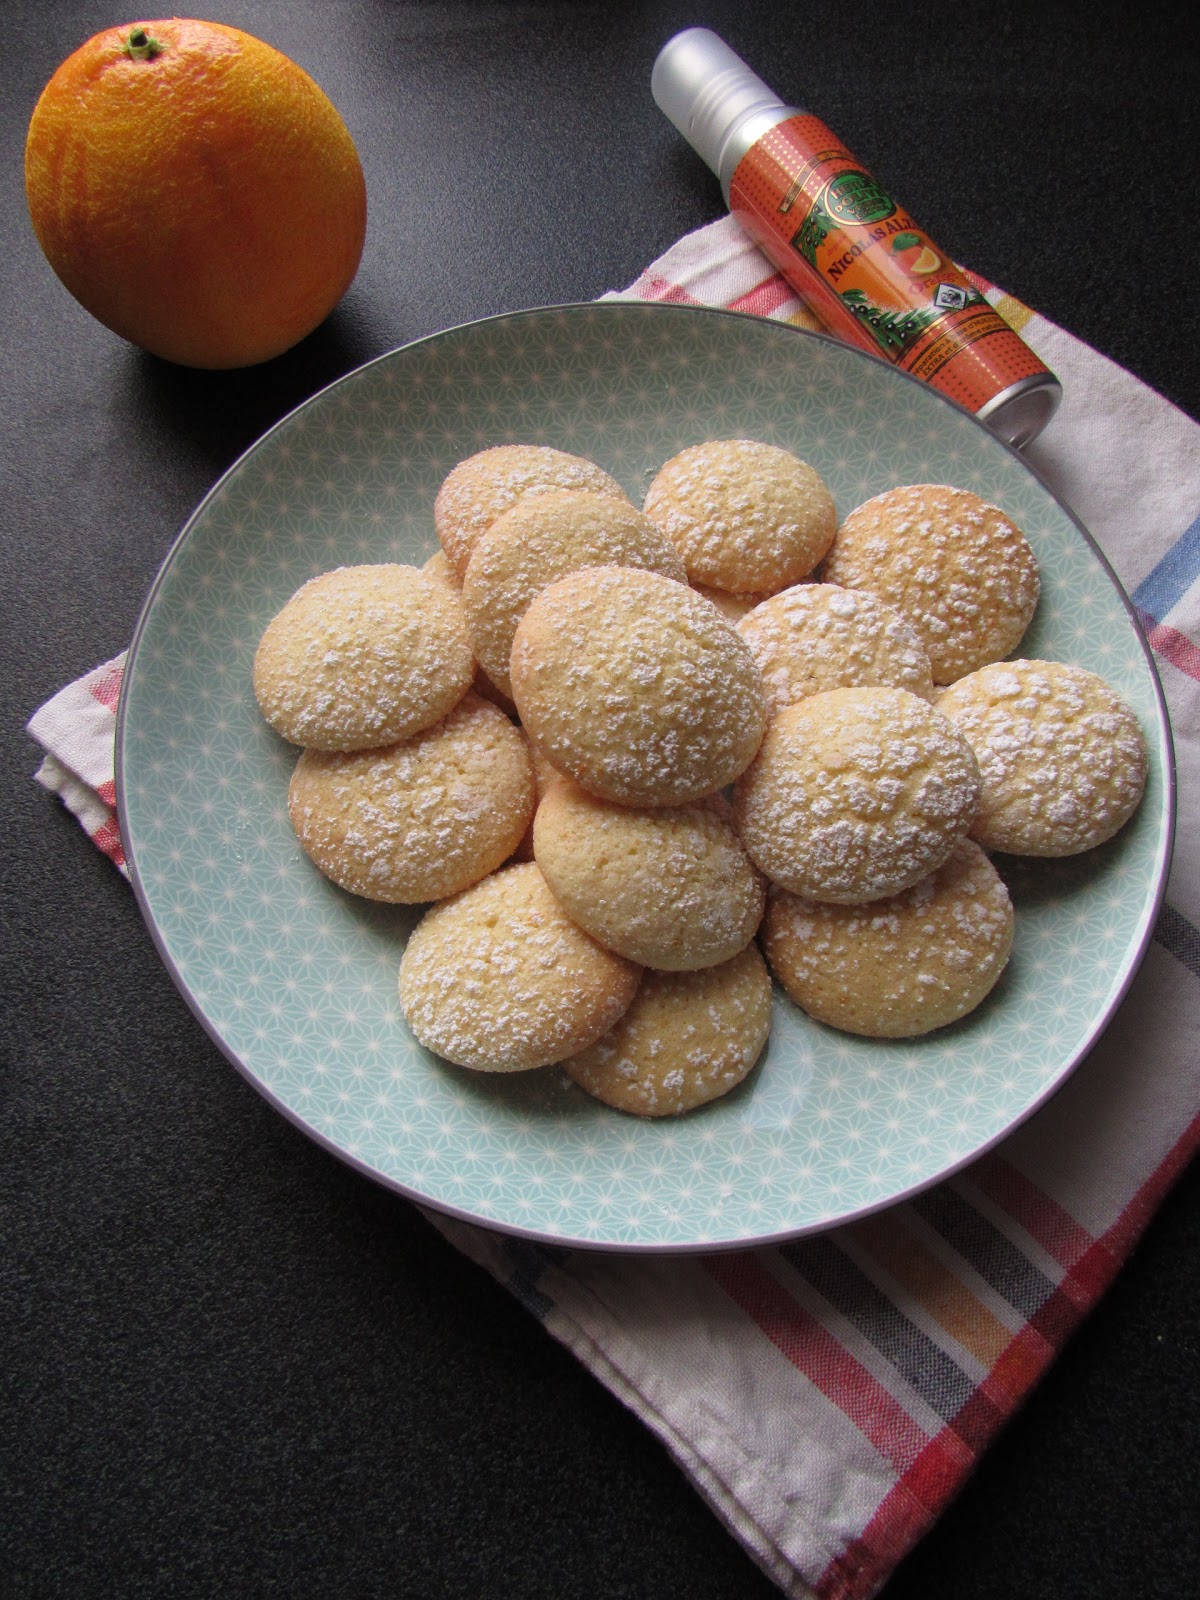 Biscuits au jus d'orange